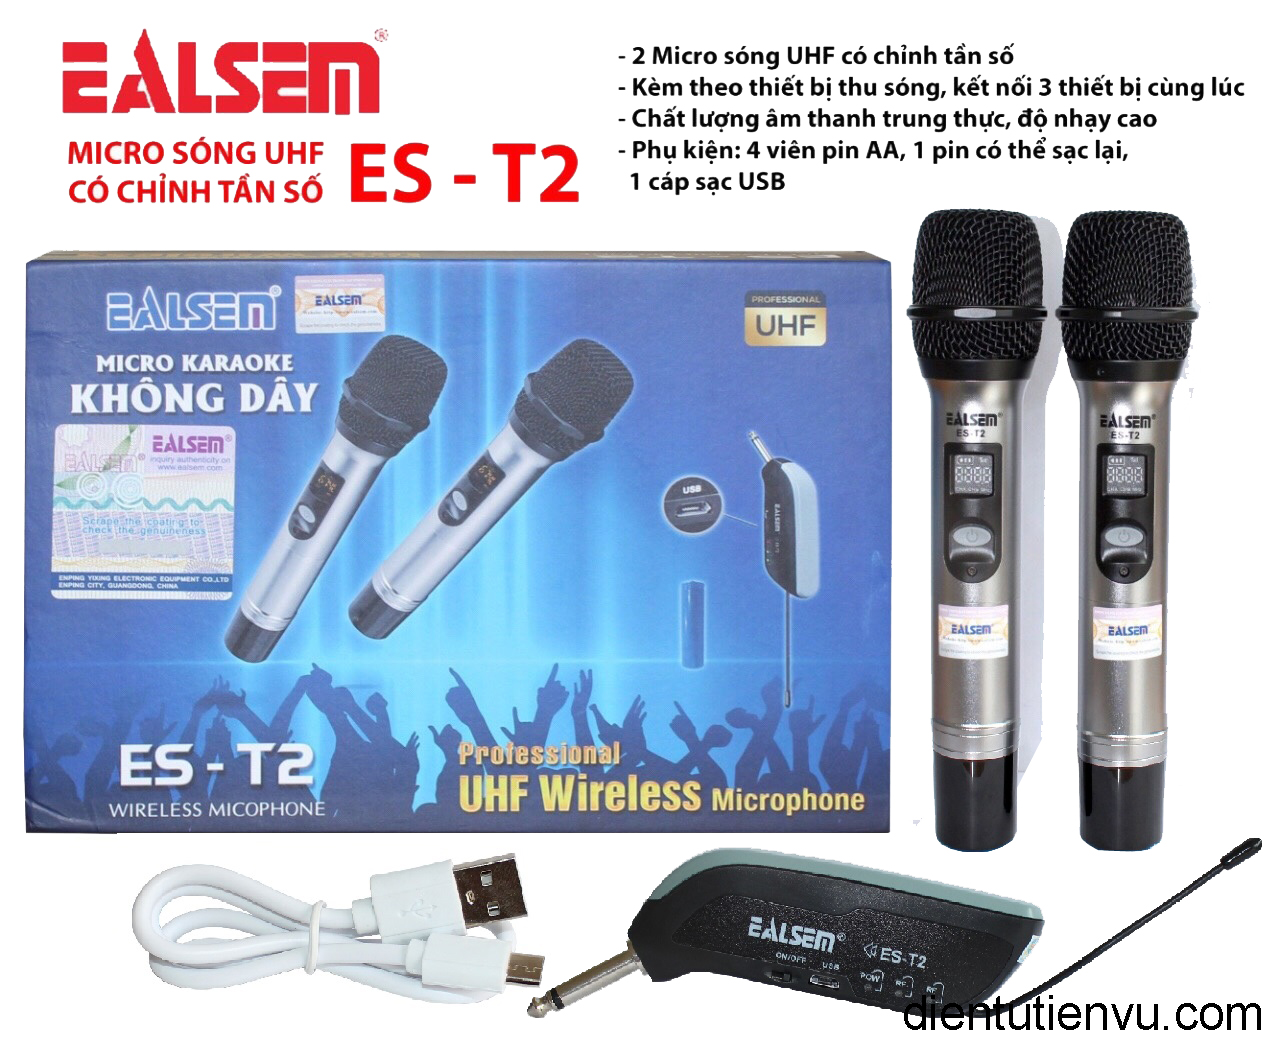 Micro không dây Ealsem ES-T2 dùng loa kéo